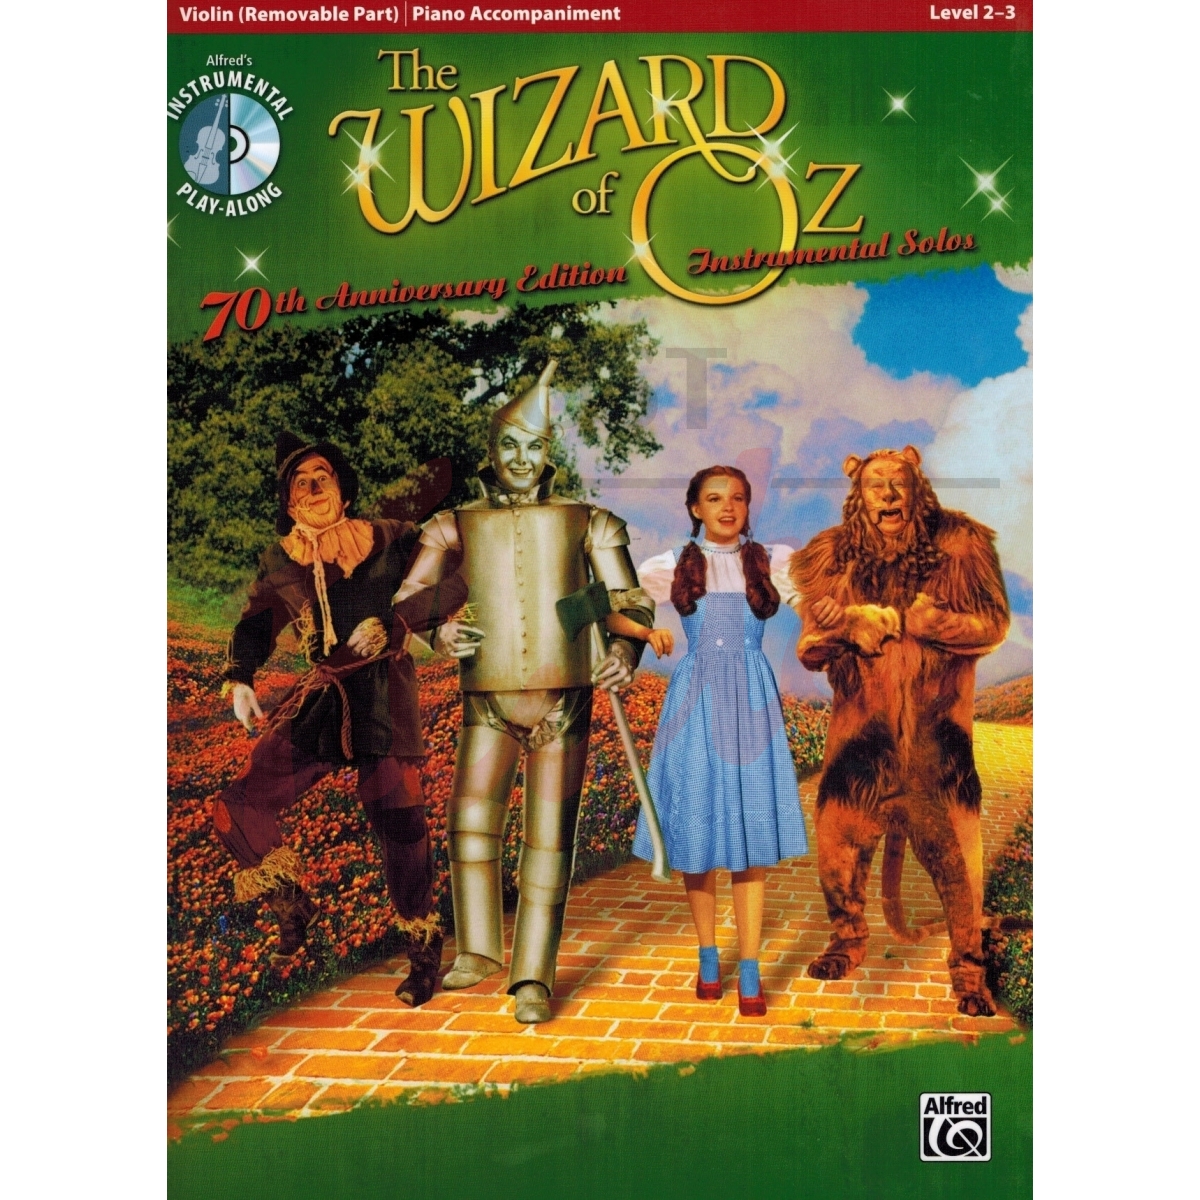 The Wizard Of Oz [Violin]